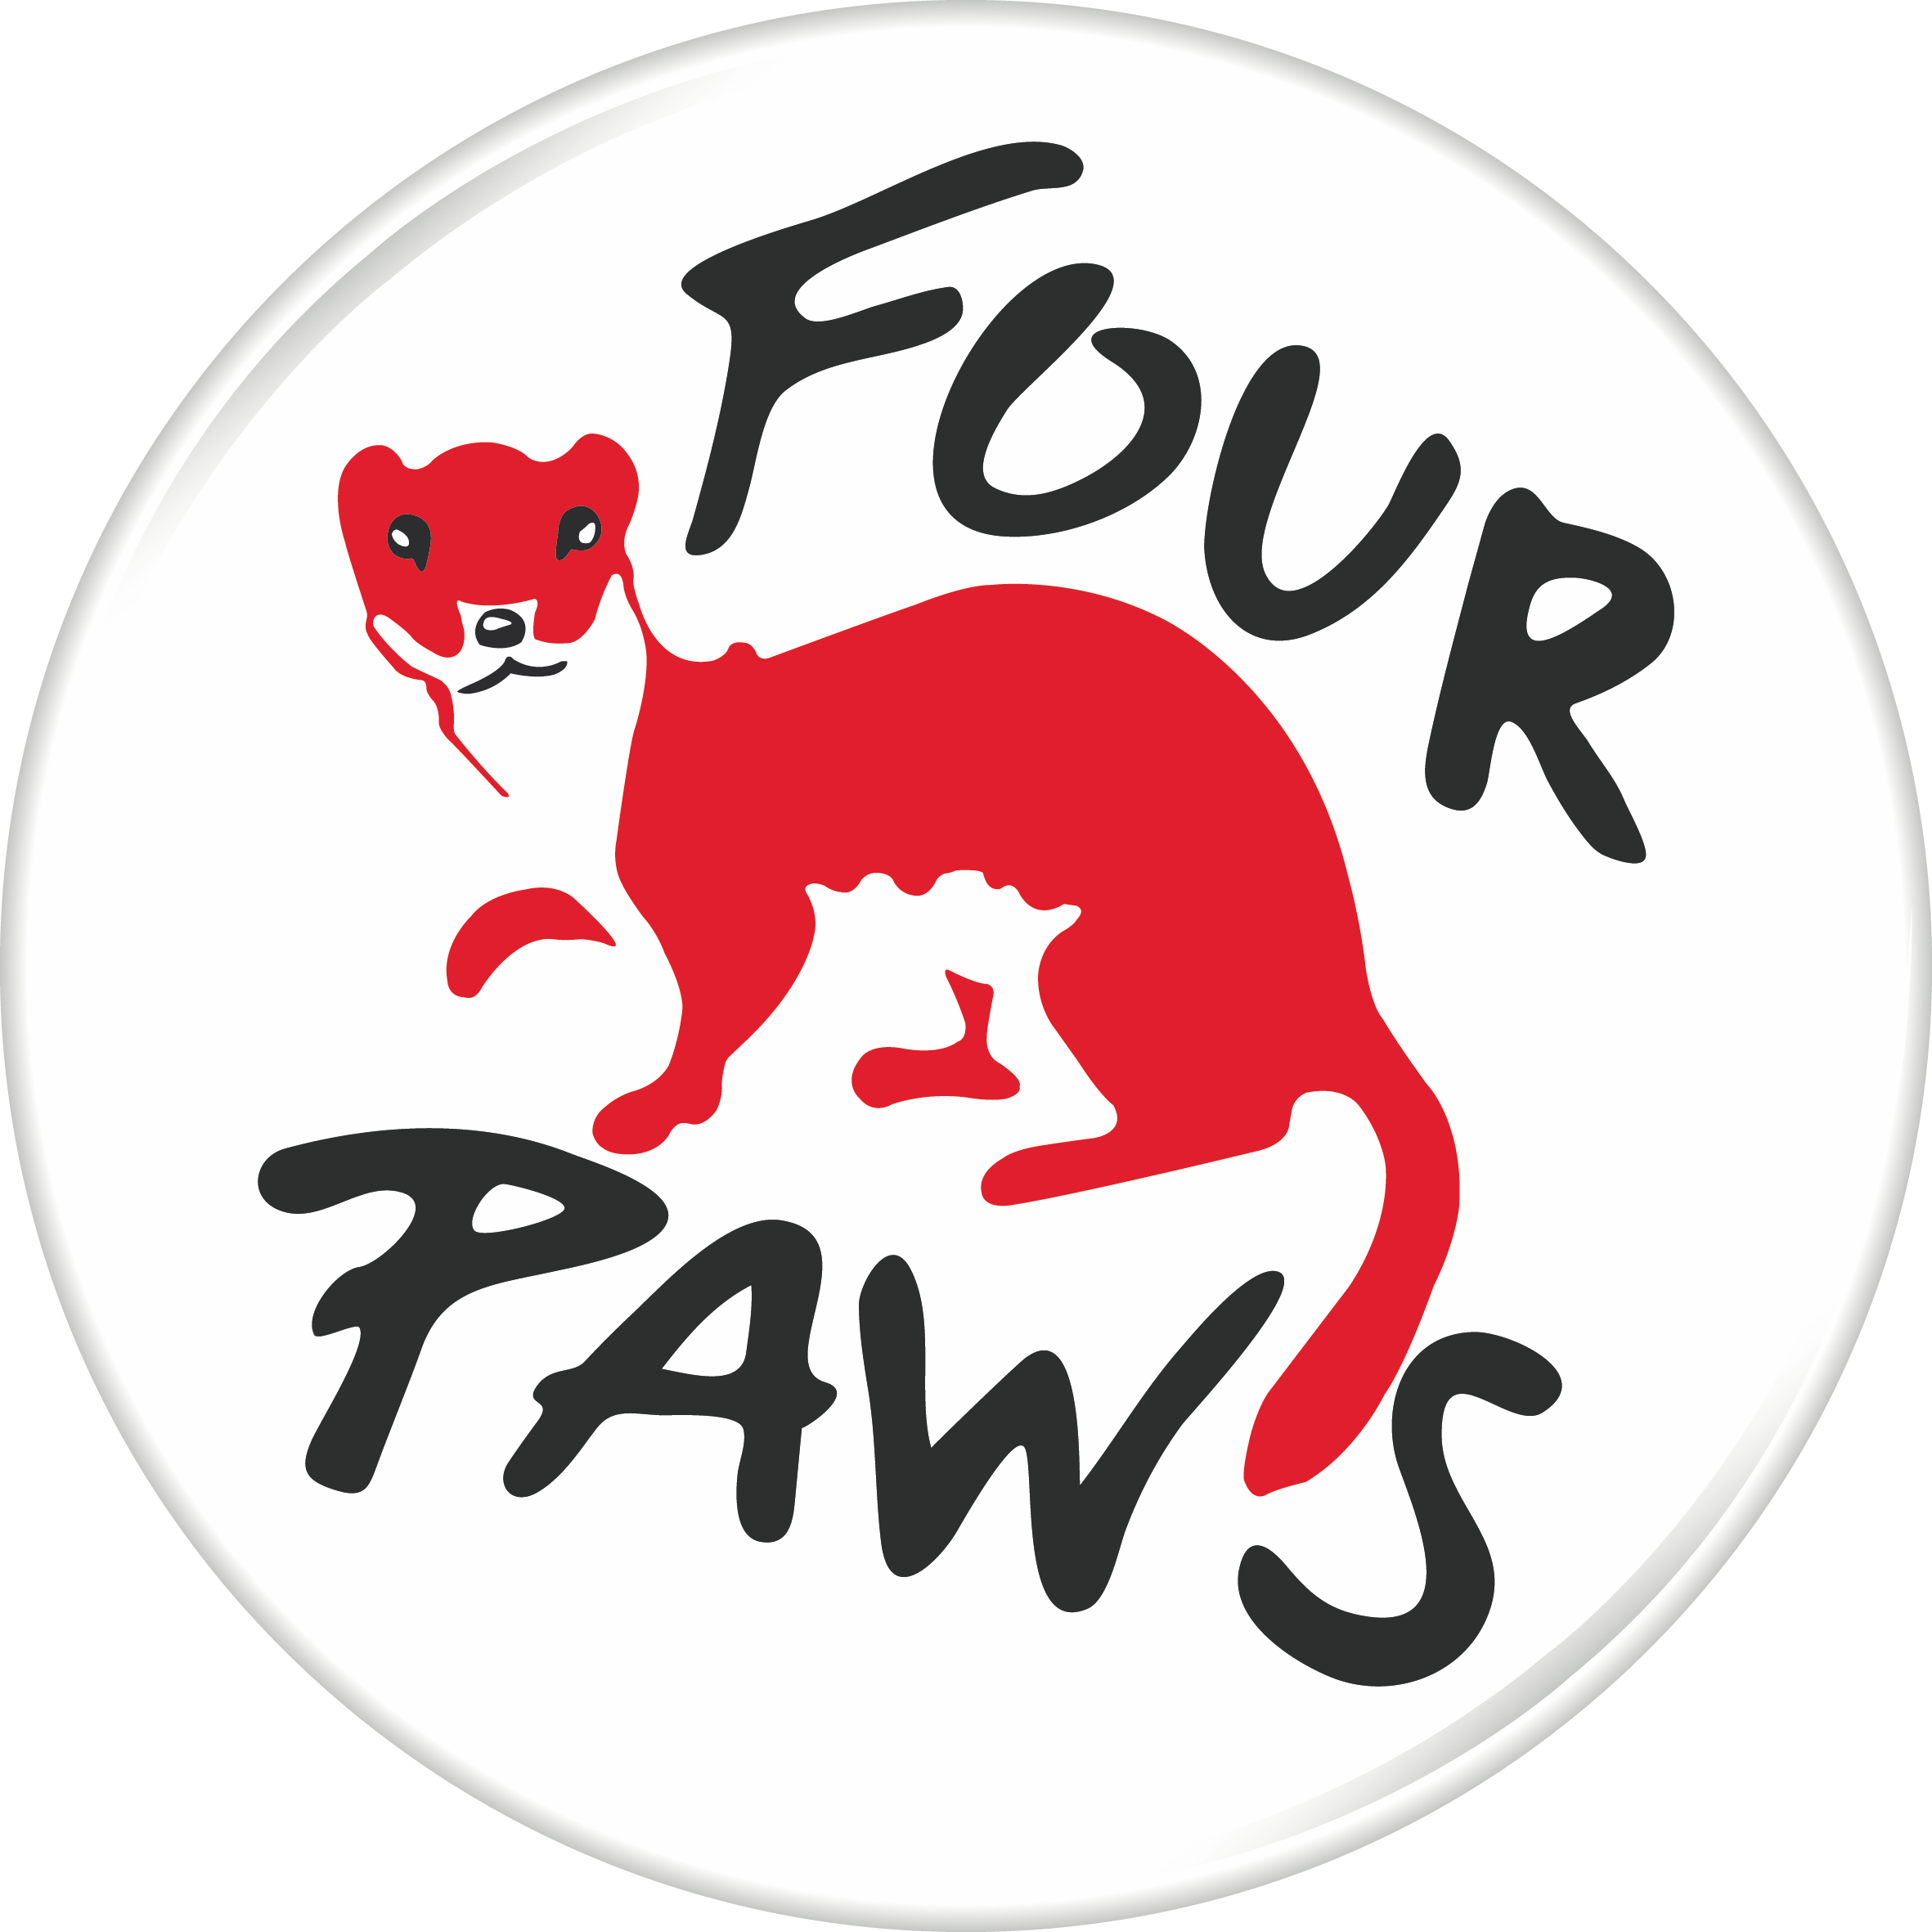 Domazhyr Bear Sanctuary - Four Paws International Logo (2362x2362)